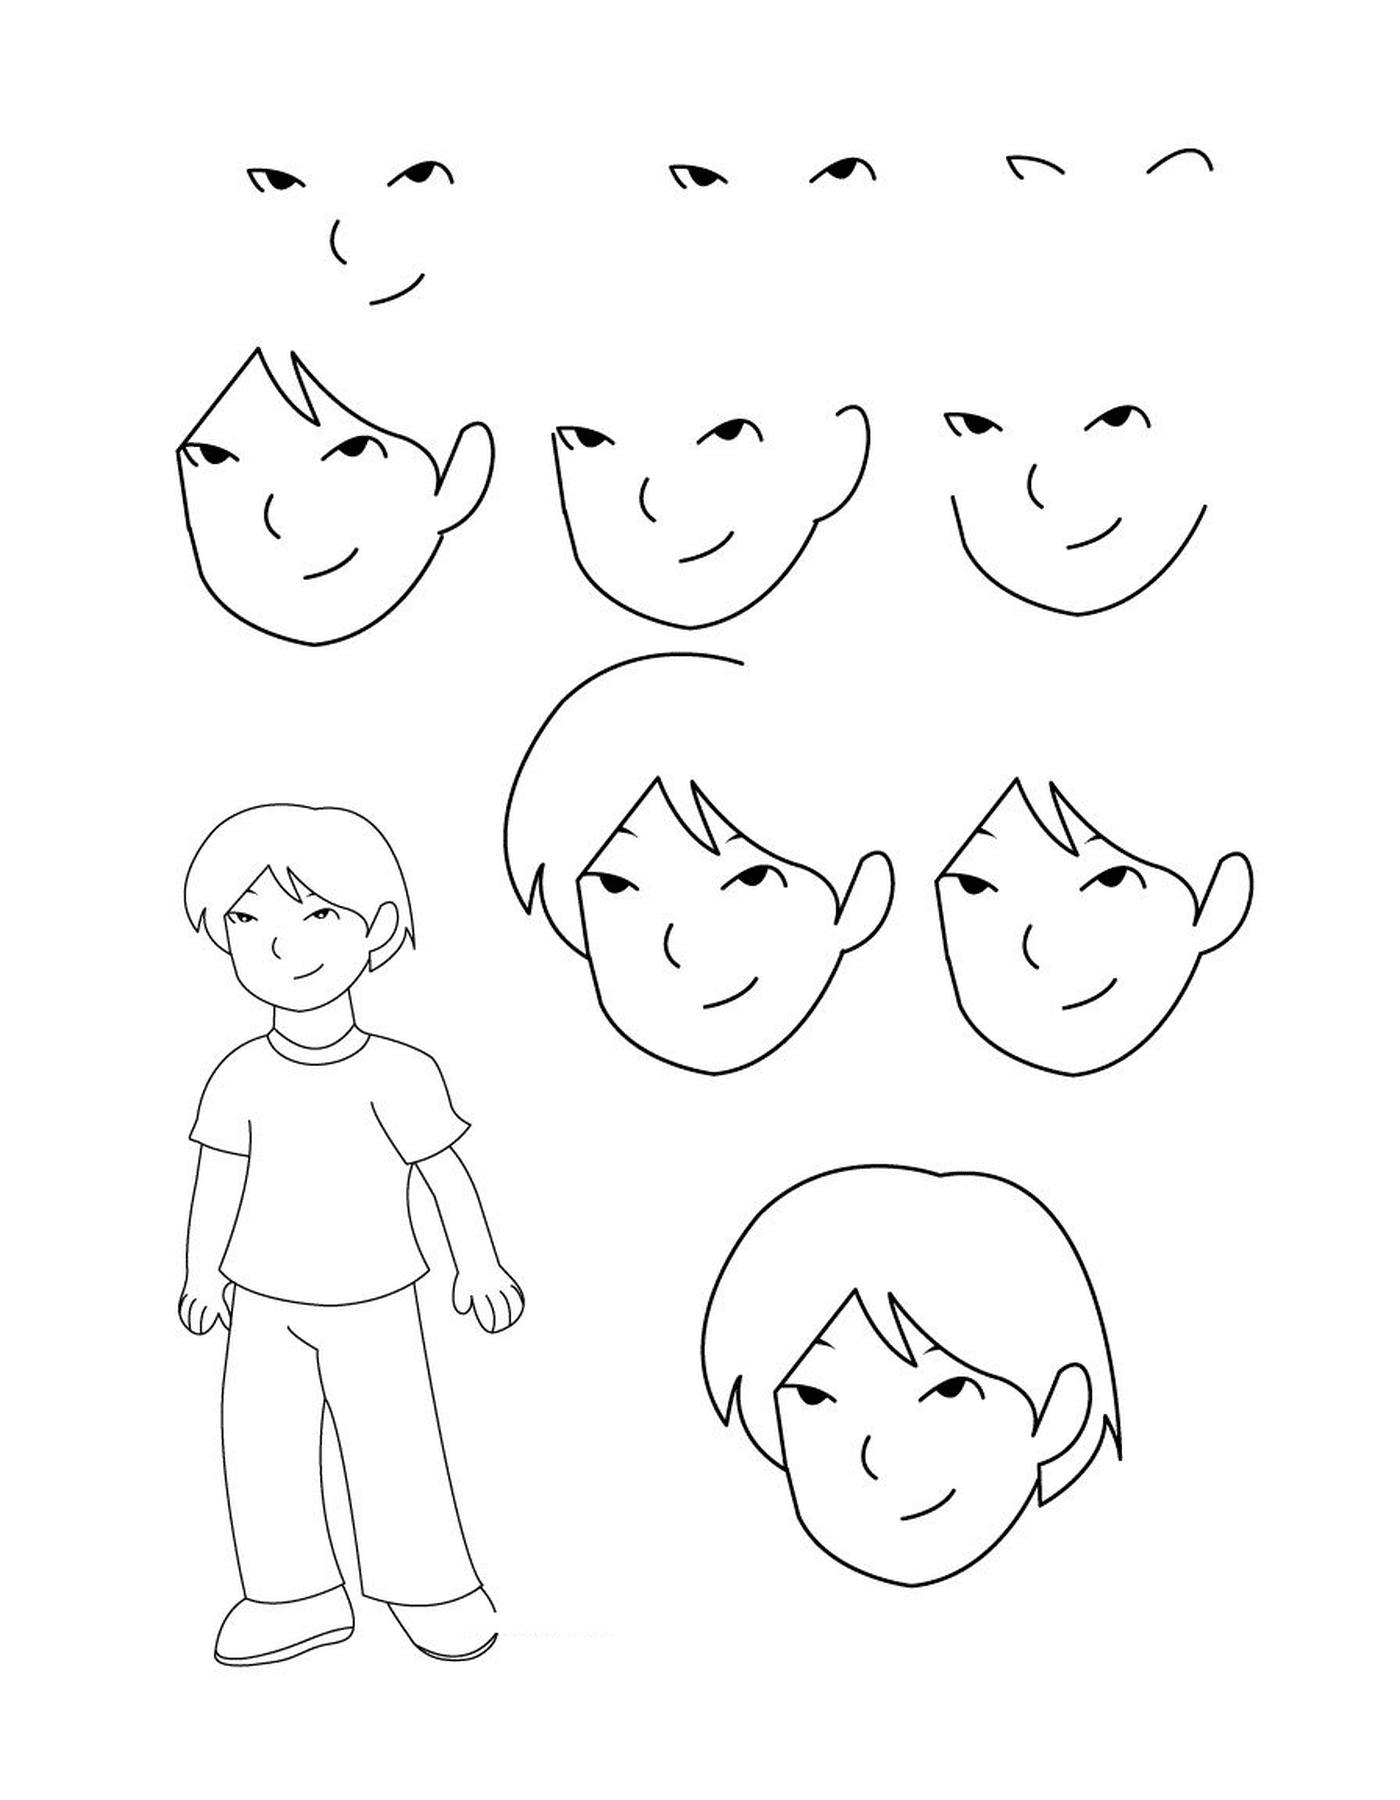  How to draw a boy 